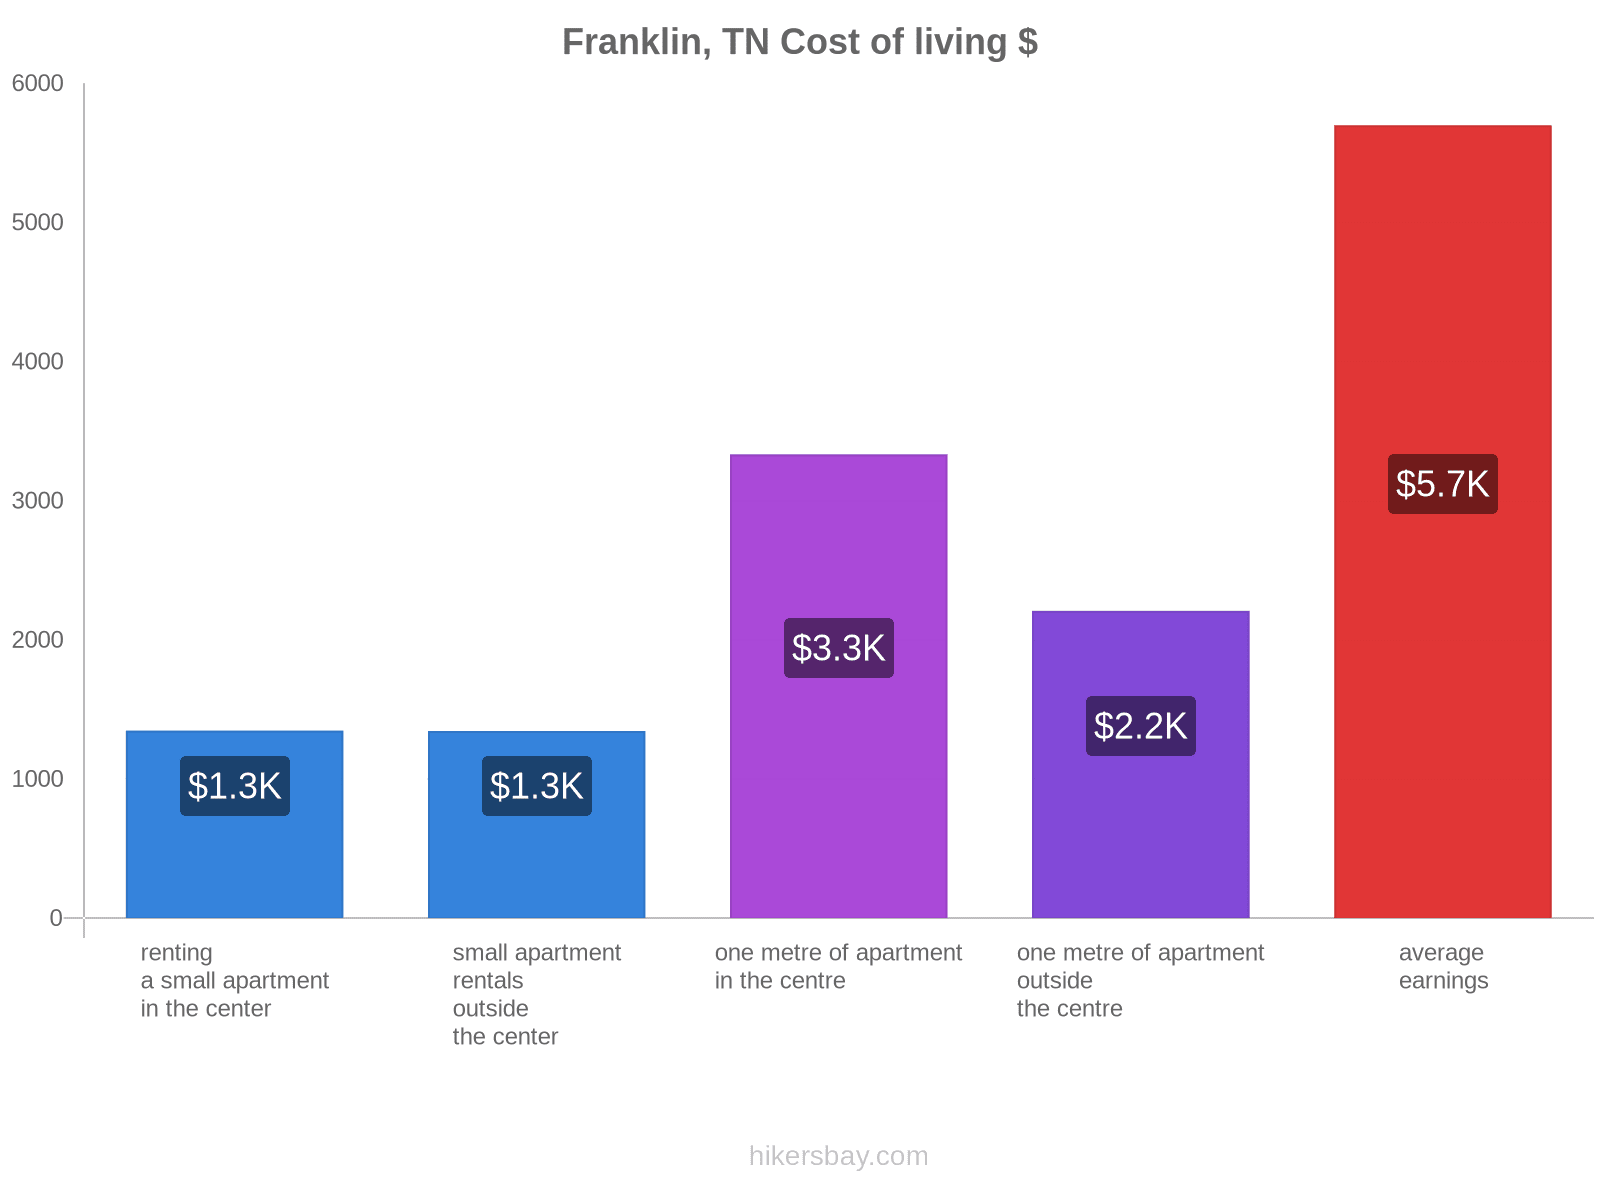 Franklin, TN cost of living hikersbay.com